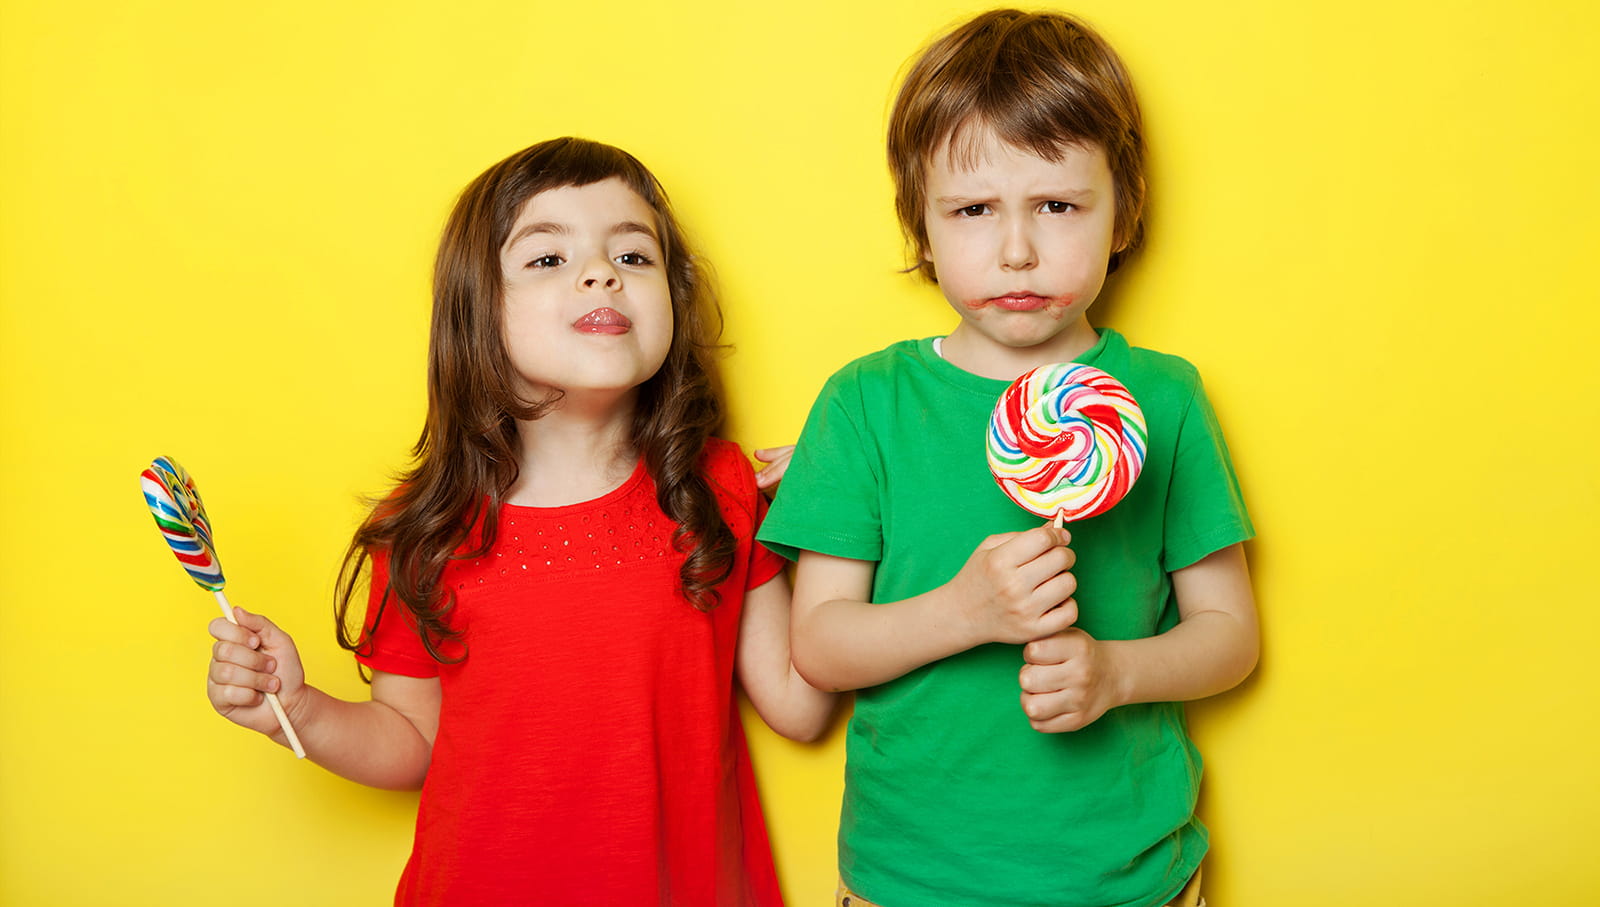 Studio portrait of cute children with lollipops on yellow background